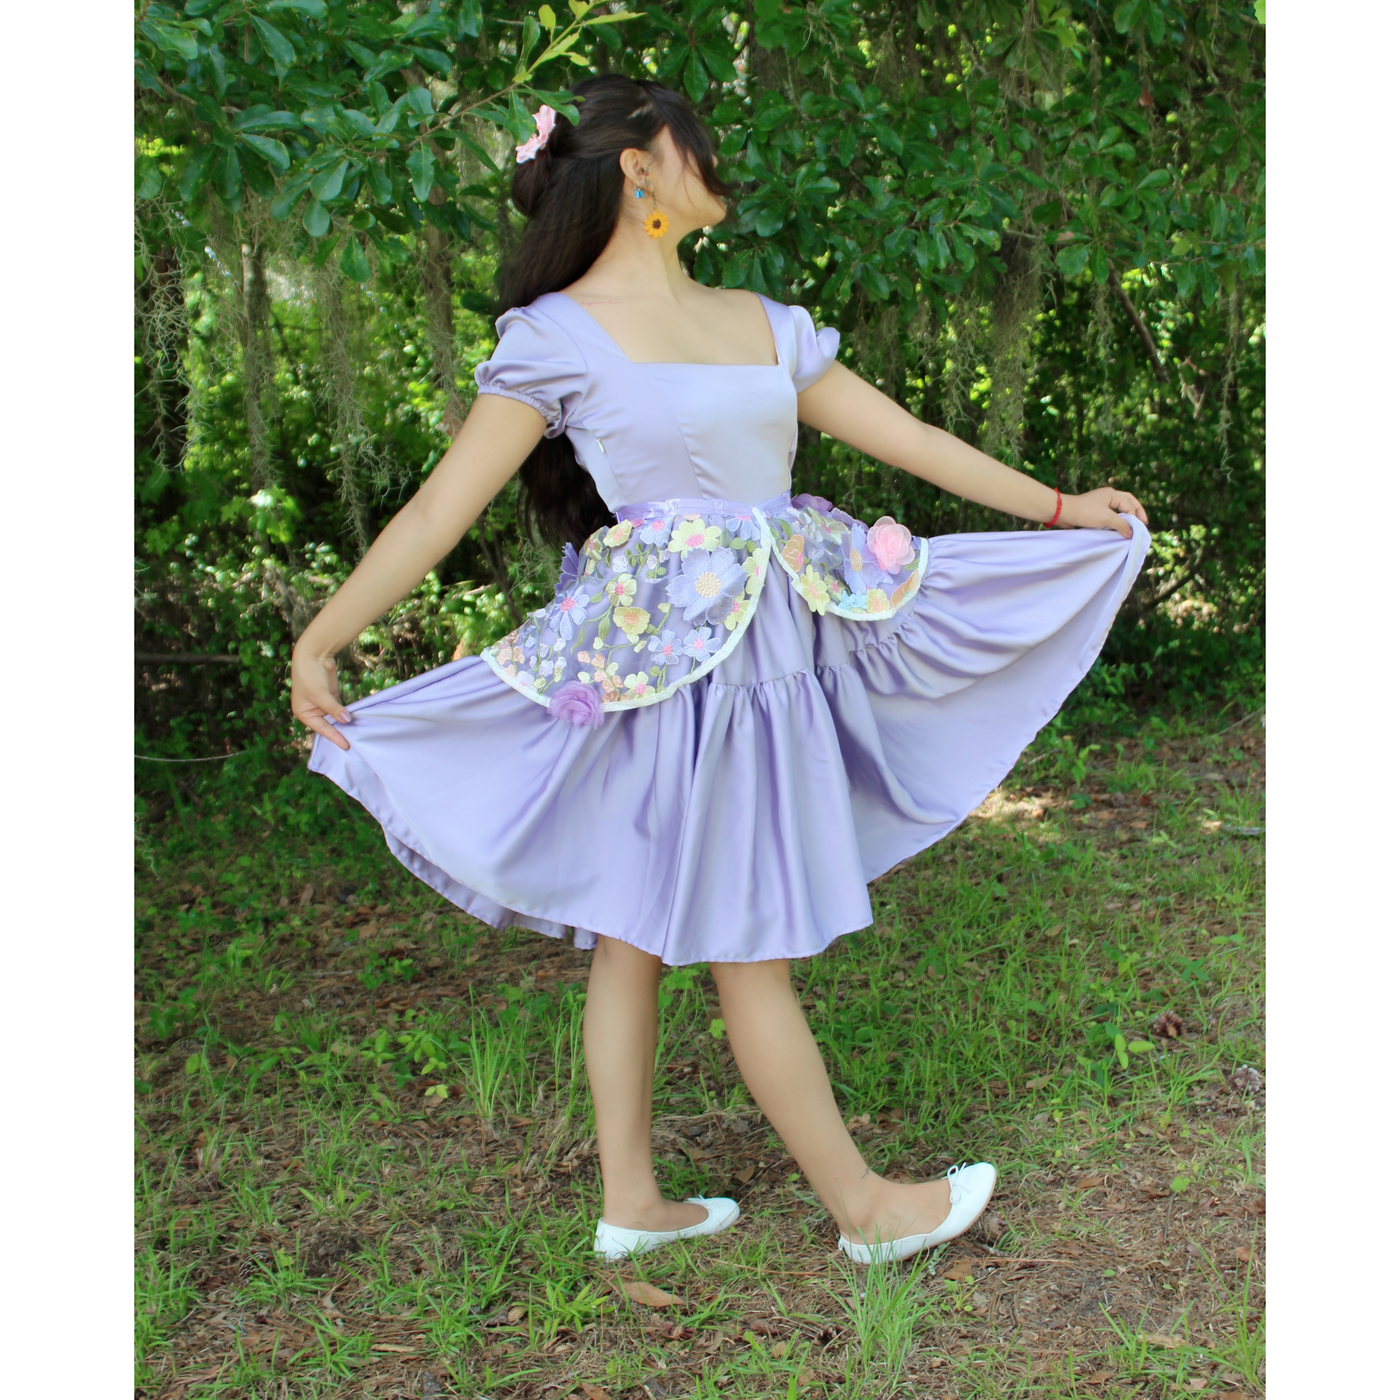 Once Upon a Twirl: Enchanted Tower Princess Adult dress